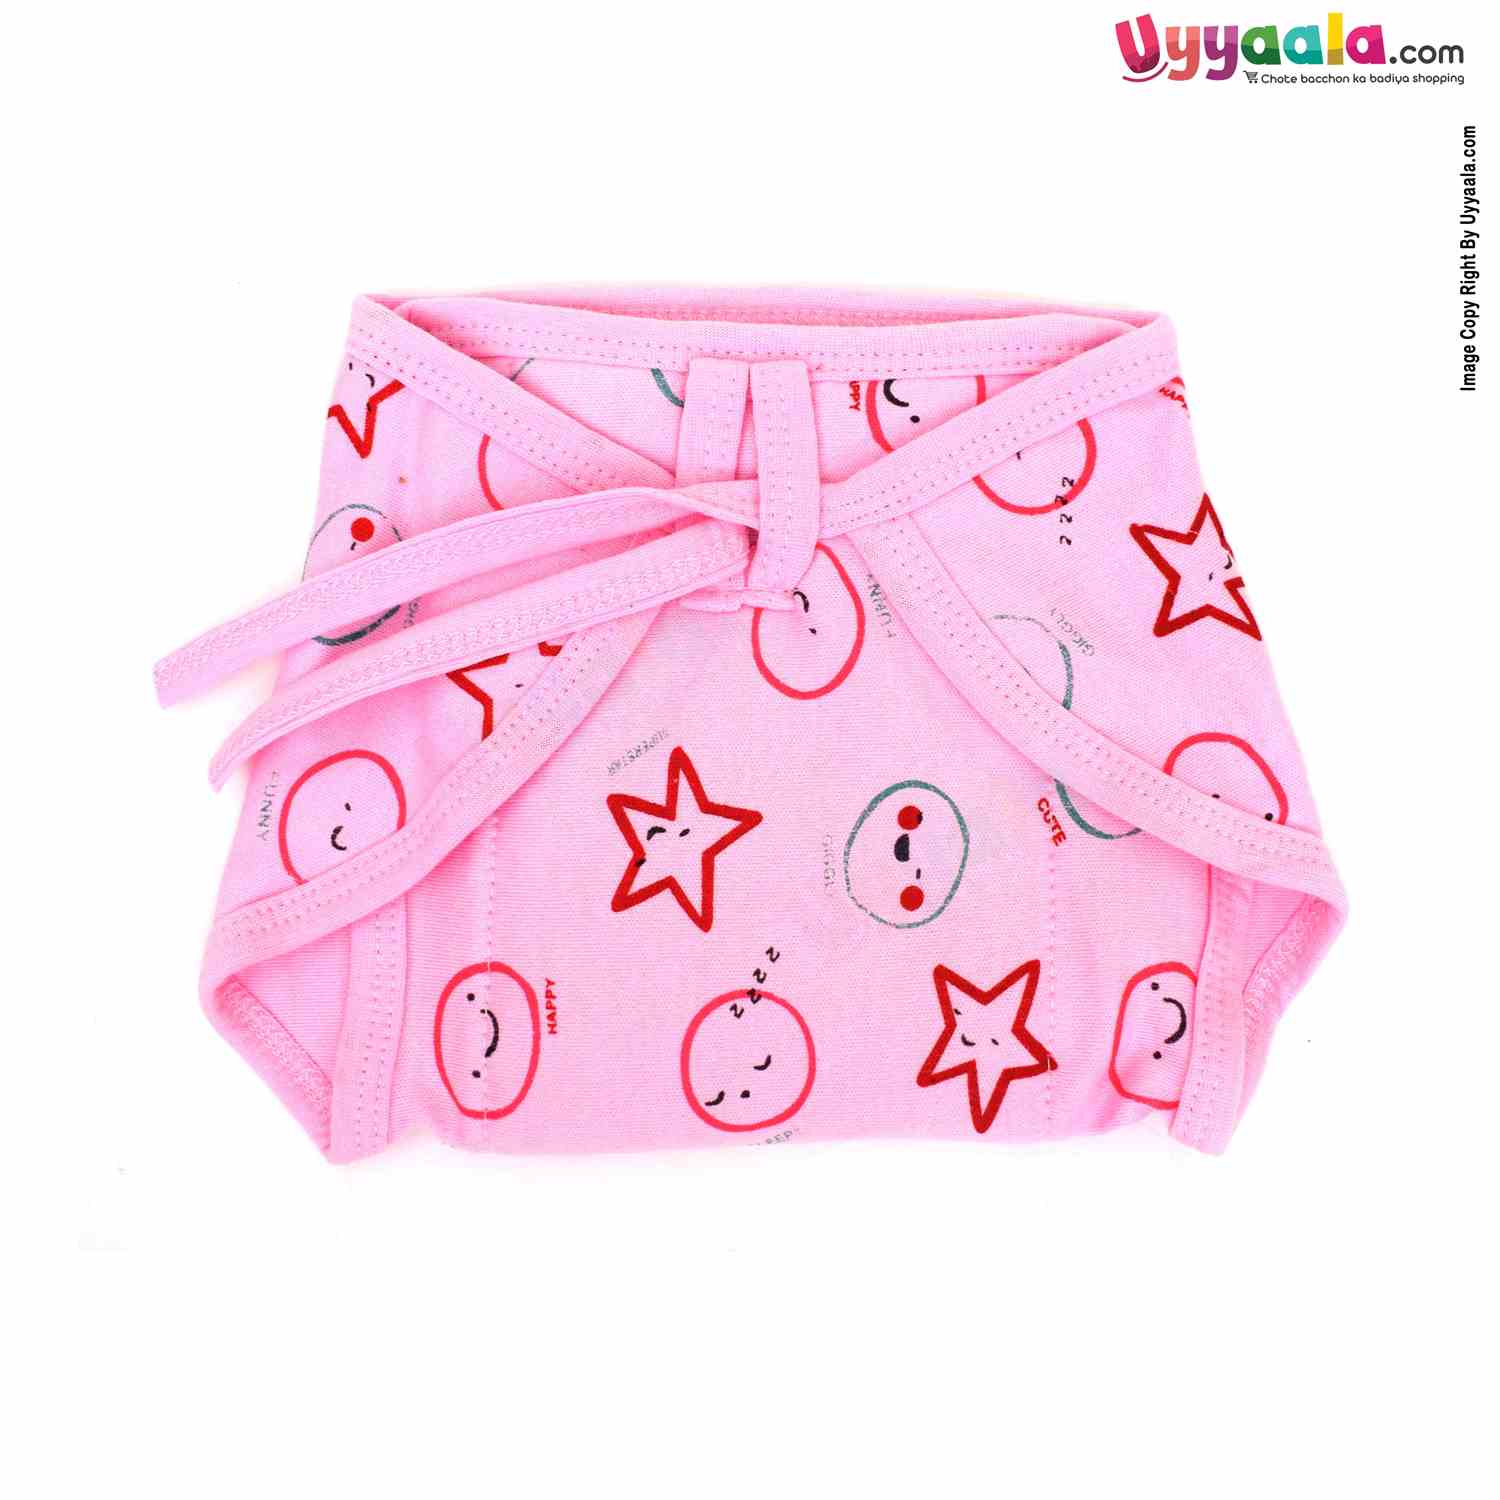 COZYCARE Washable Diapers Hosiery, Tying Model Emoji Print Pink, Yellow & Blue- 3P Set (S)